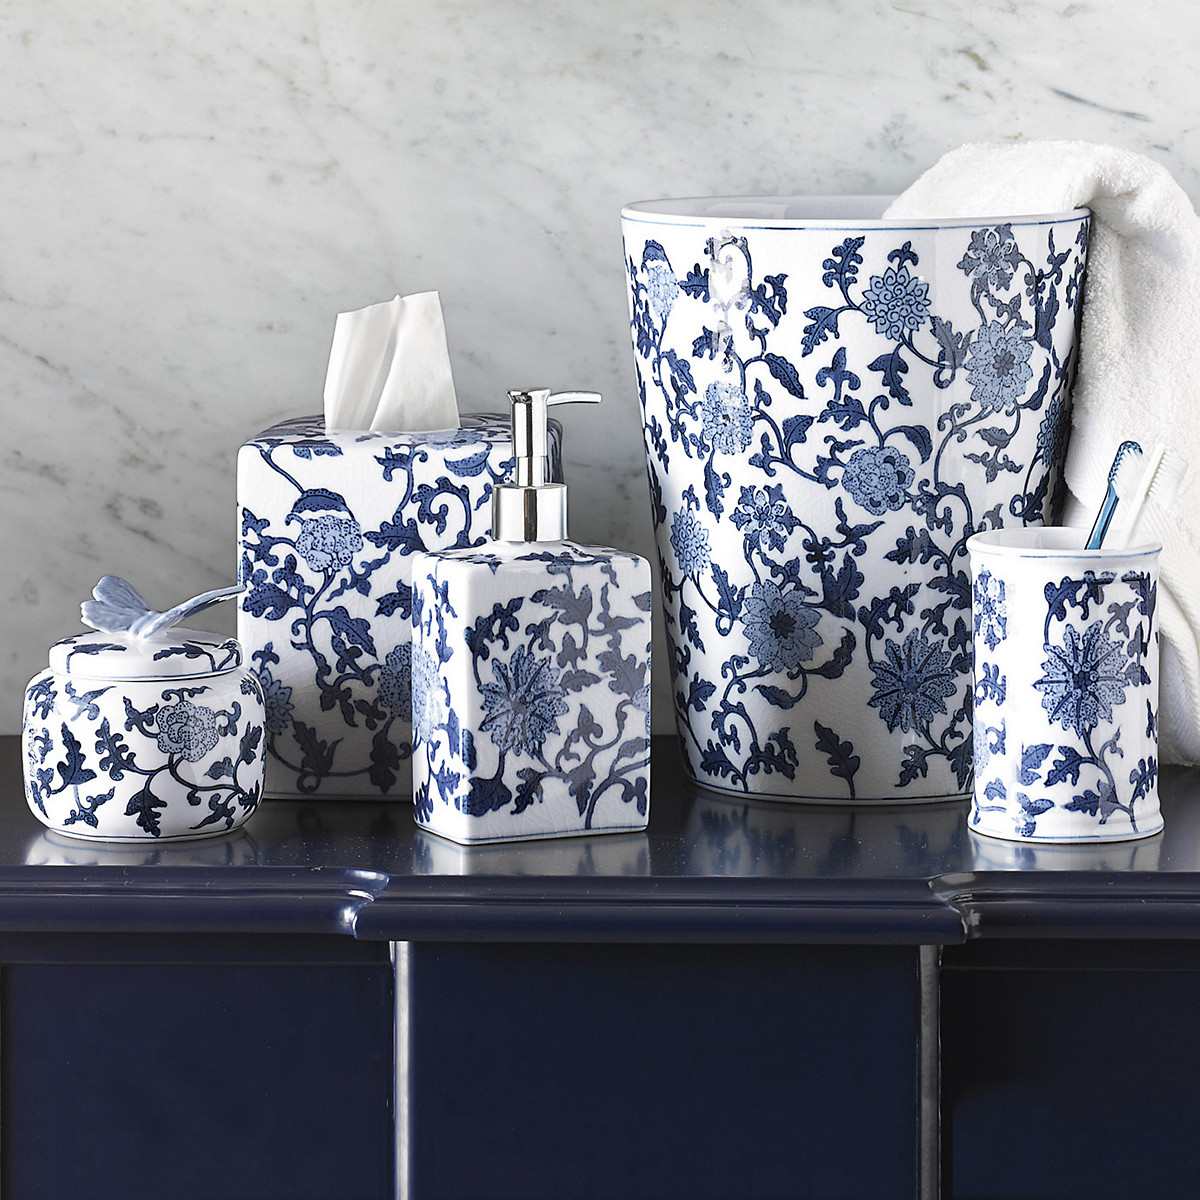 Blue And White Bathroom Decor
 Blue & White Bath Porcelain Wastebasket